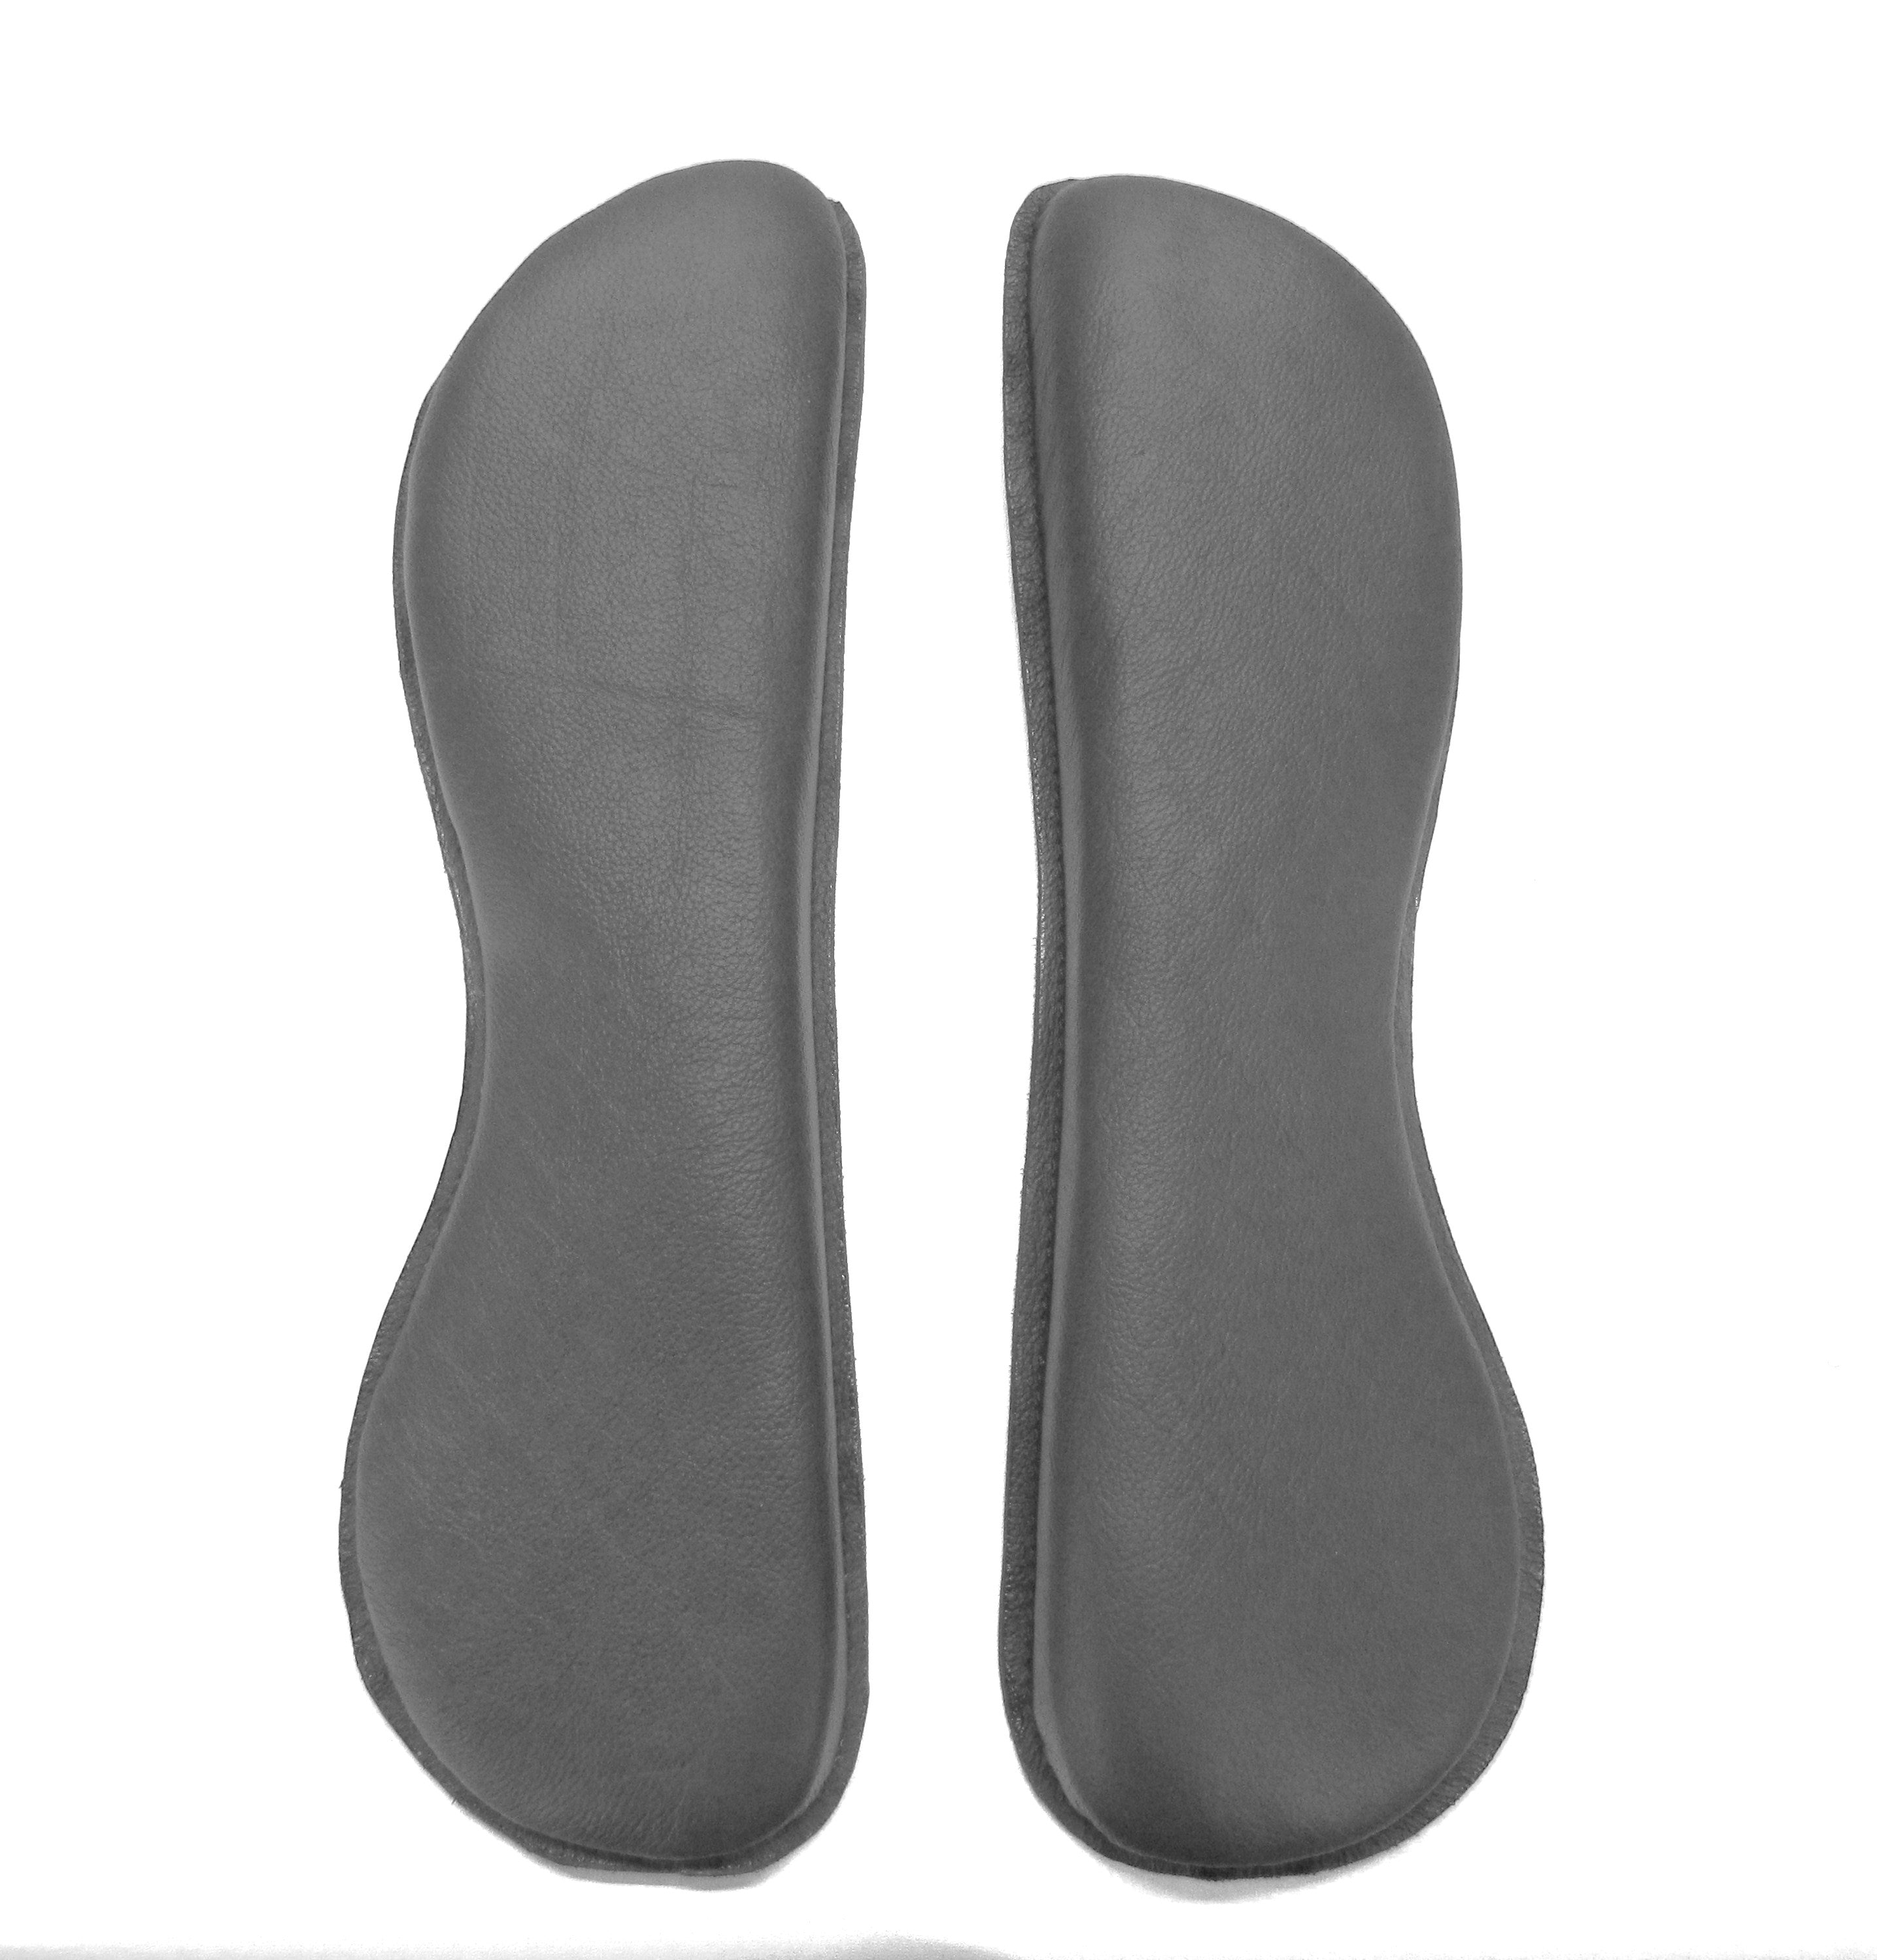 3 cm high Velcro cushion standard shape; Saddle cushion/Velcro panels